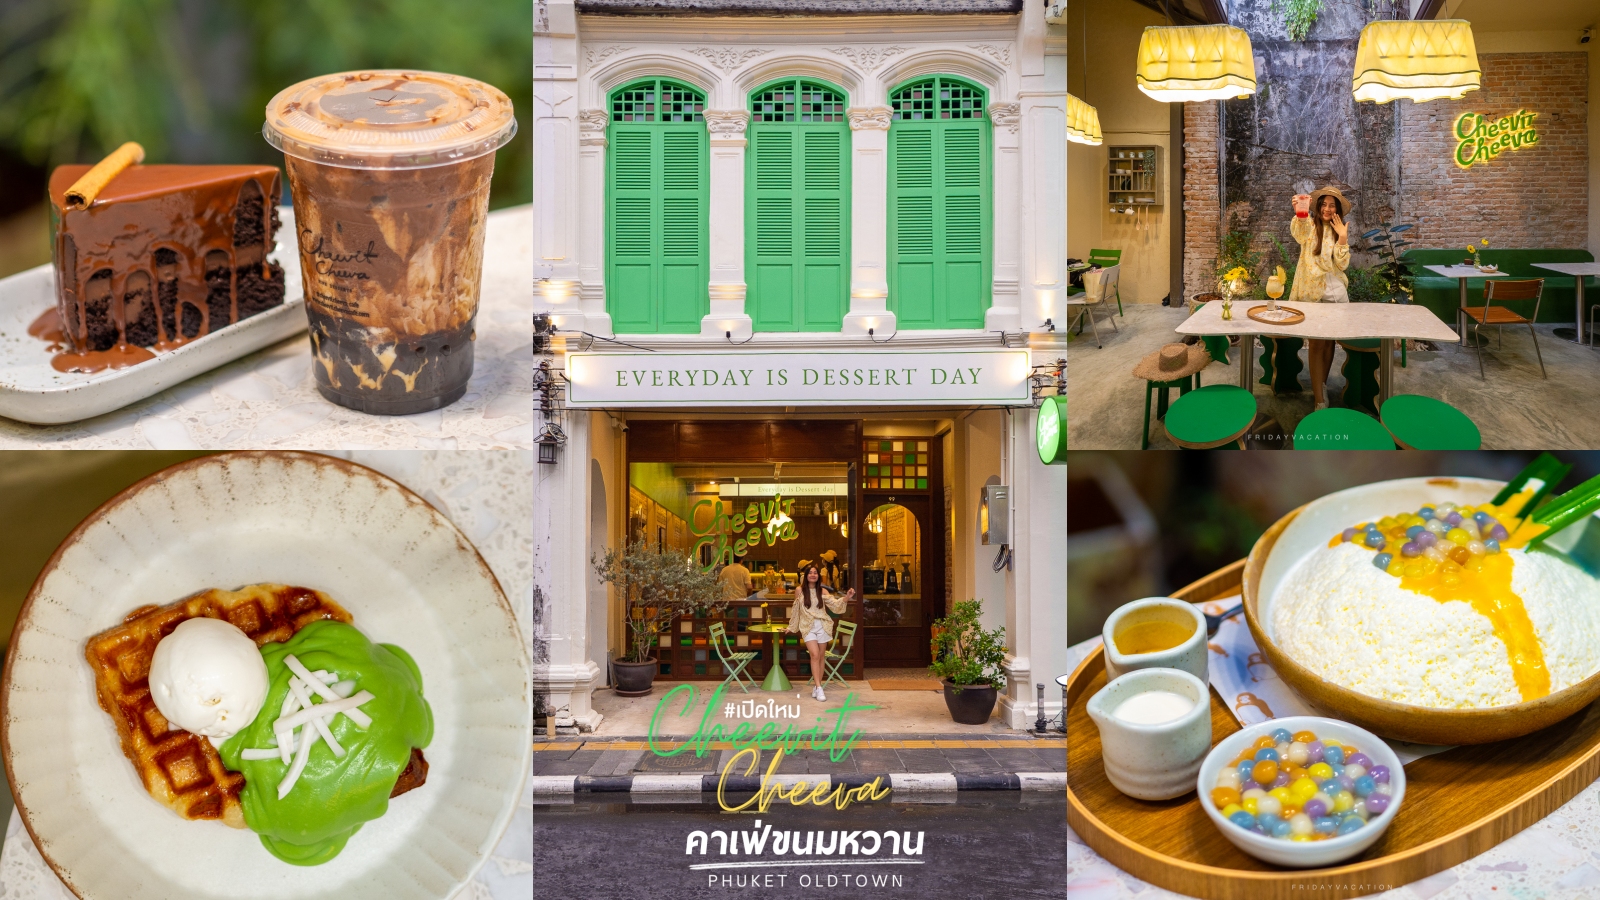 Cheevit Cheeva Phuket ชีวิตชีวา สาขาภูเก็ต คาเฟ่บิงซู-ขนมหวาน กลางเมืองเมืองเก่าภูเก็ต มี Specialty coffe ด้วย